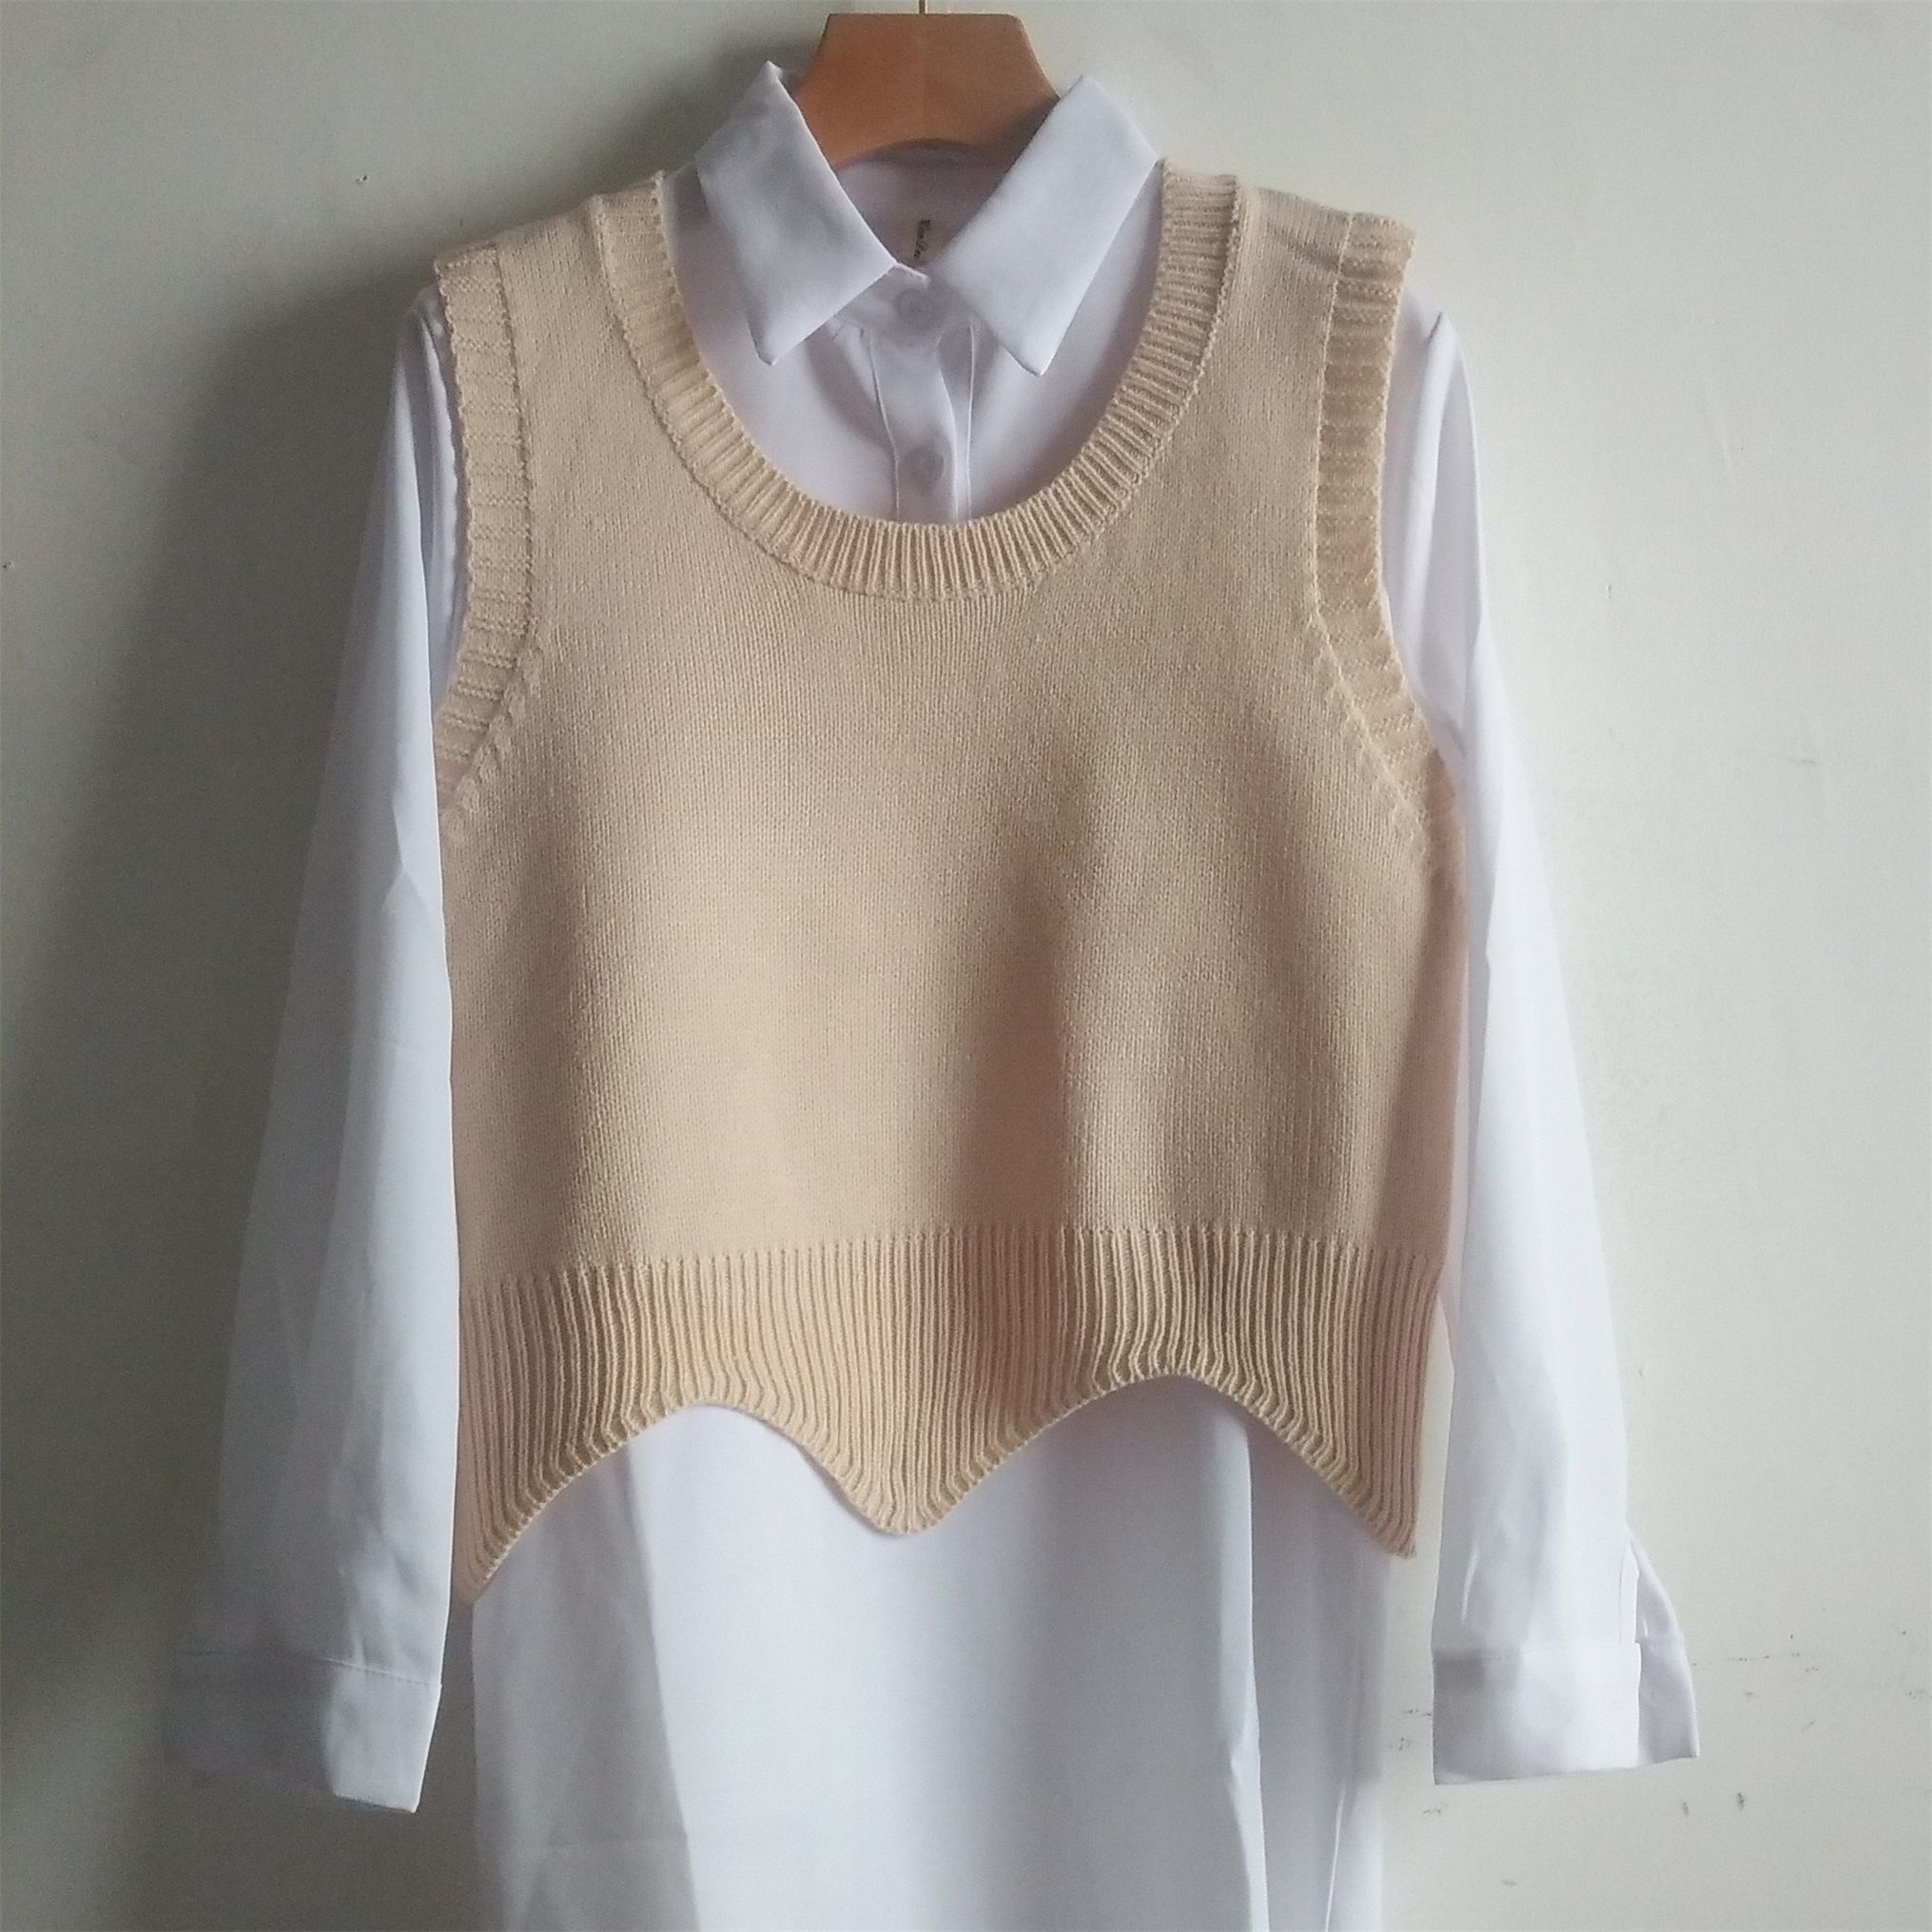 Wave sweater vest, female, sweater vest, bottom wave triangle Sweater Vest (single vest)